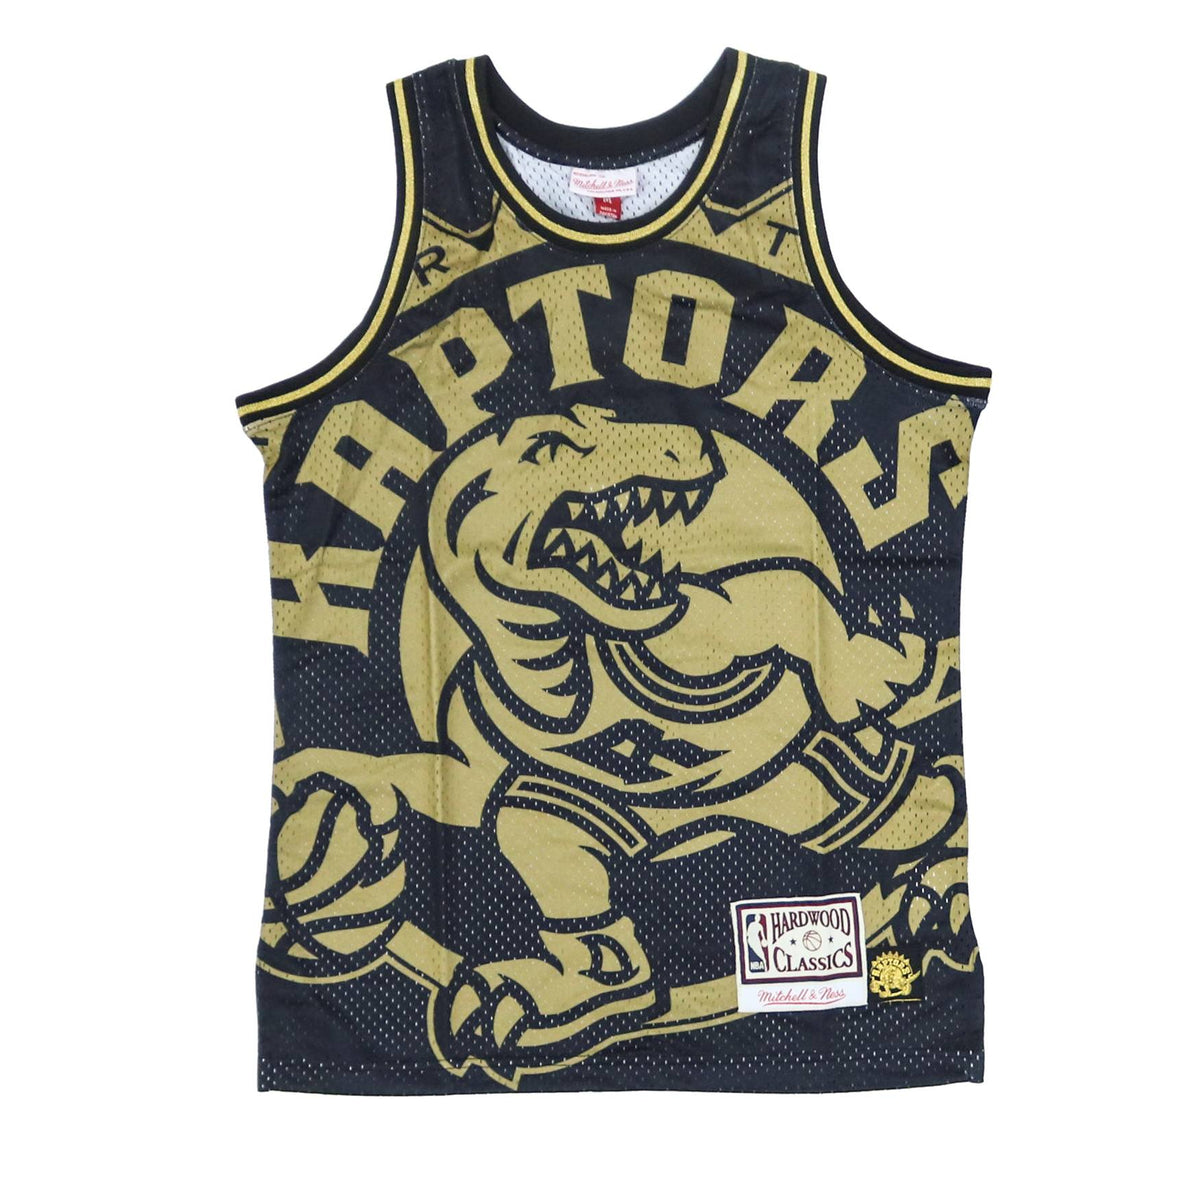 TANK TOPS - Mitchell & Ness Men NBA Toronto Raptors Big Face Black Gold Jersey HCTKJKBIGFACETR